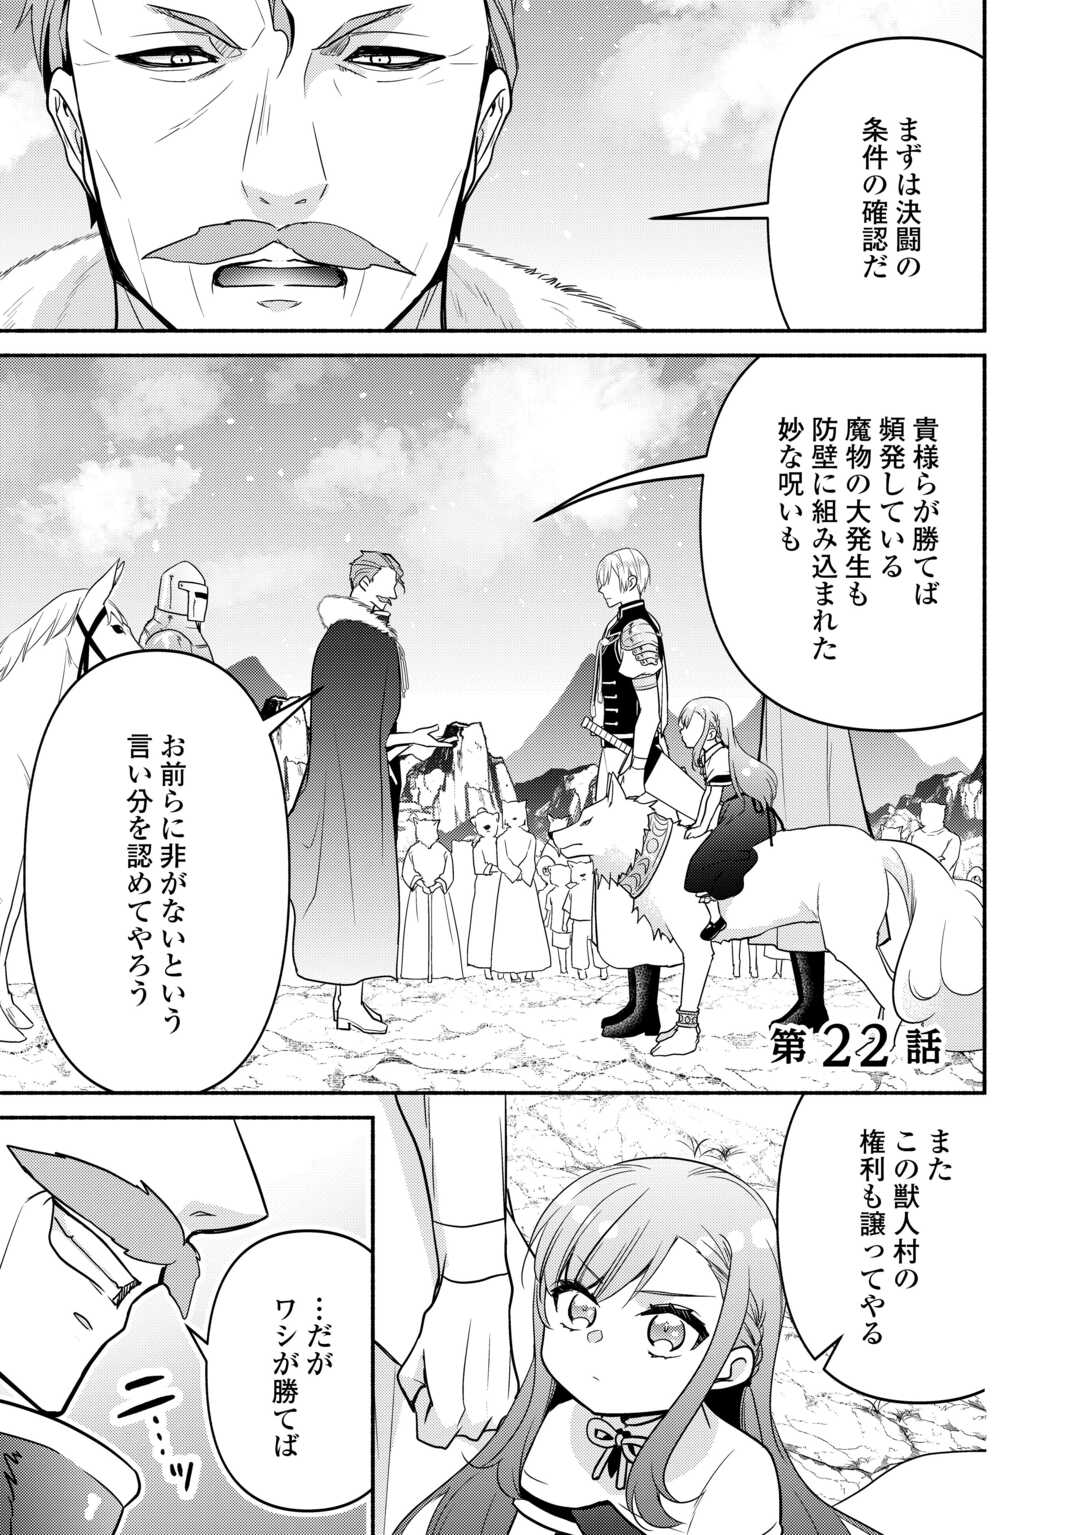 Tensei Youjo. Kamikemono to Ouji to, Saikyou no Ojisan Youhei-dan no Naka de Ikiru. - Chapter 22 - Page 1